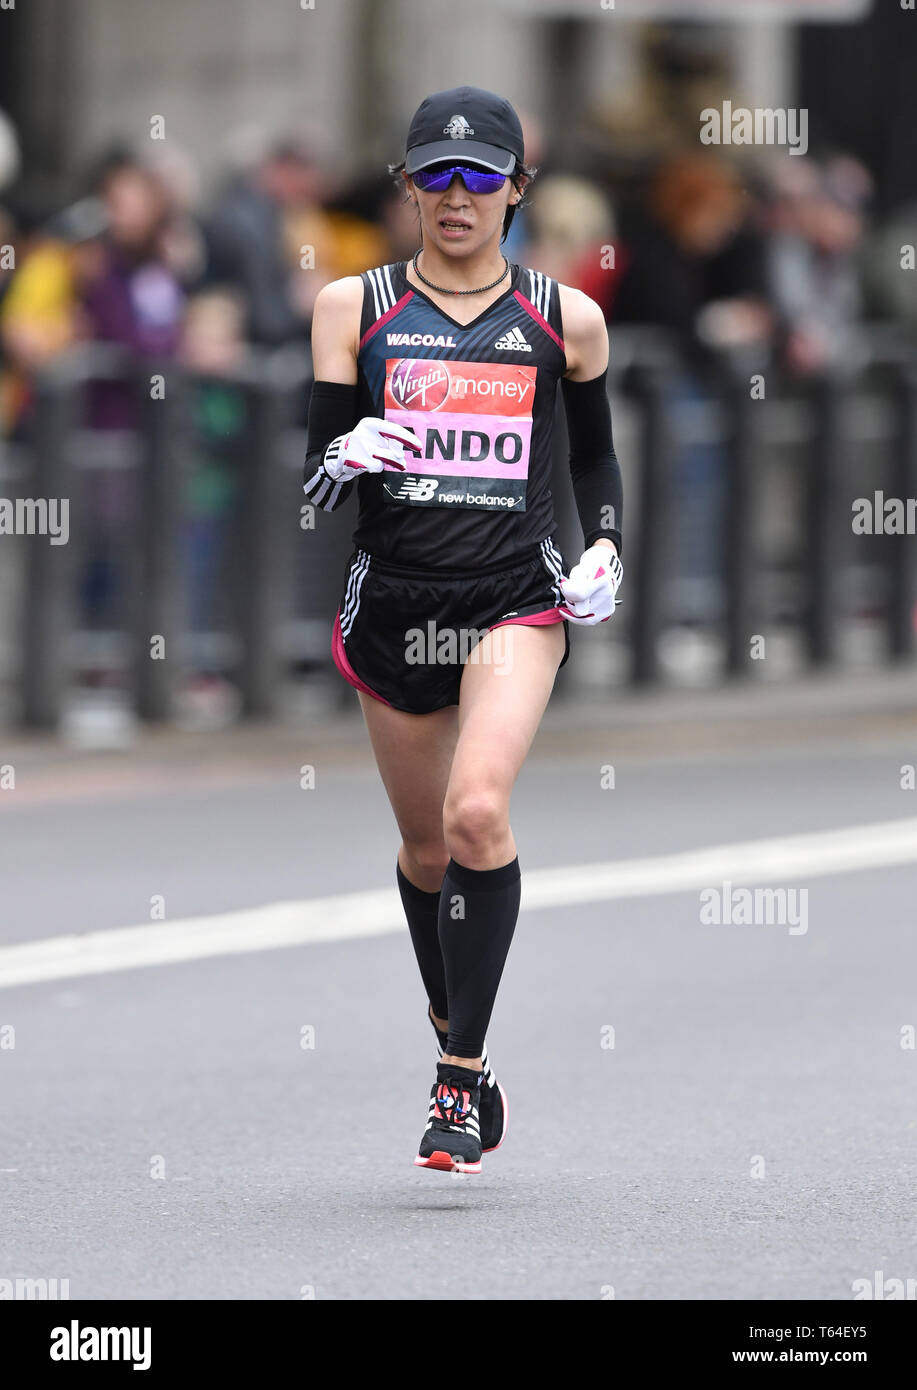 London, UK. 28th Apr, 2019. Yuka Ando (JPN) places 13th in the women's race in 2:26:47 at the 39th London Marathon in London, Sunday, April 28, 2019. (Jiro Mochizuki/Image of Sport) Photo via Credit: Newscom/Alamy Live News Stock Photo